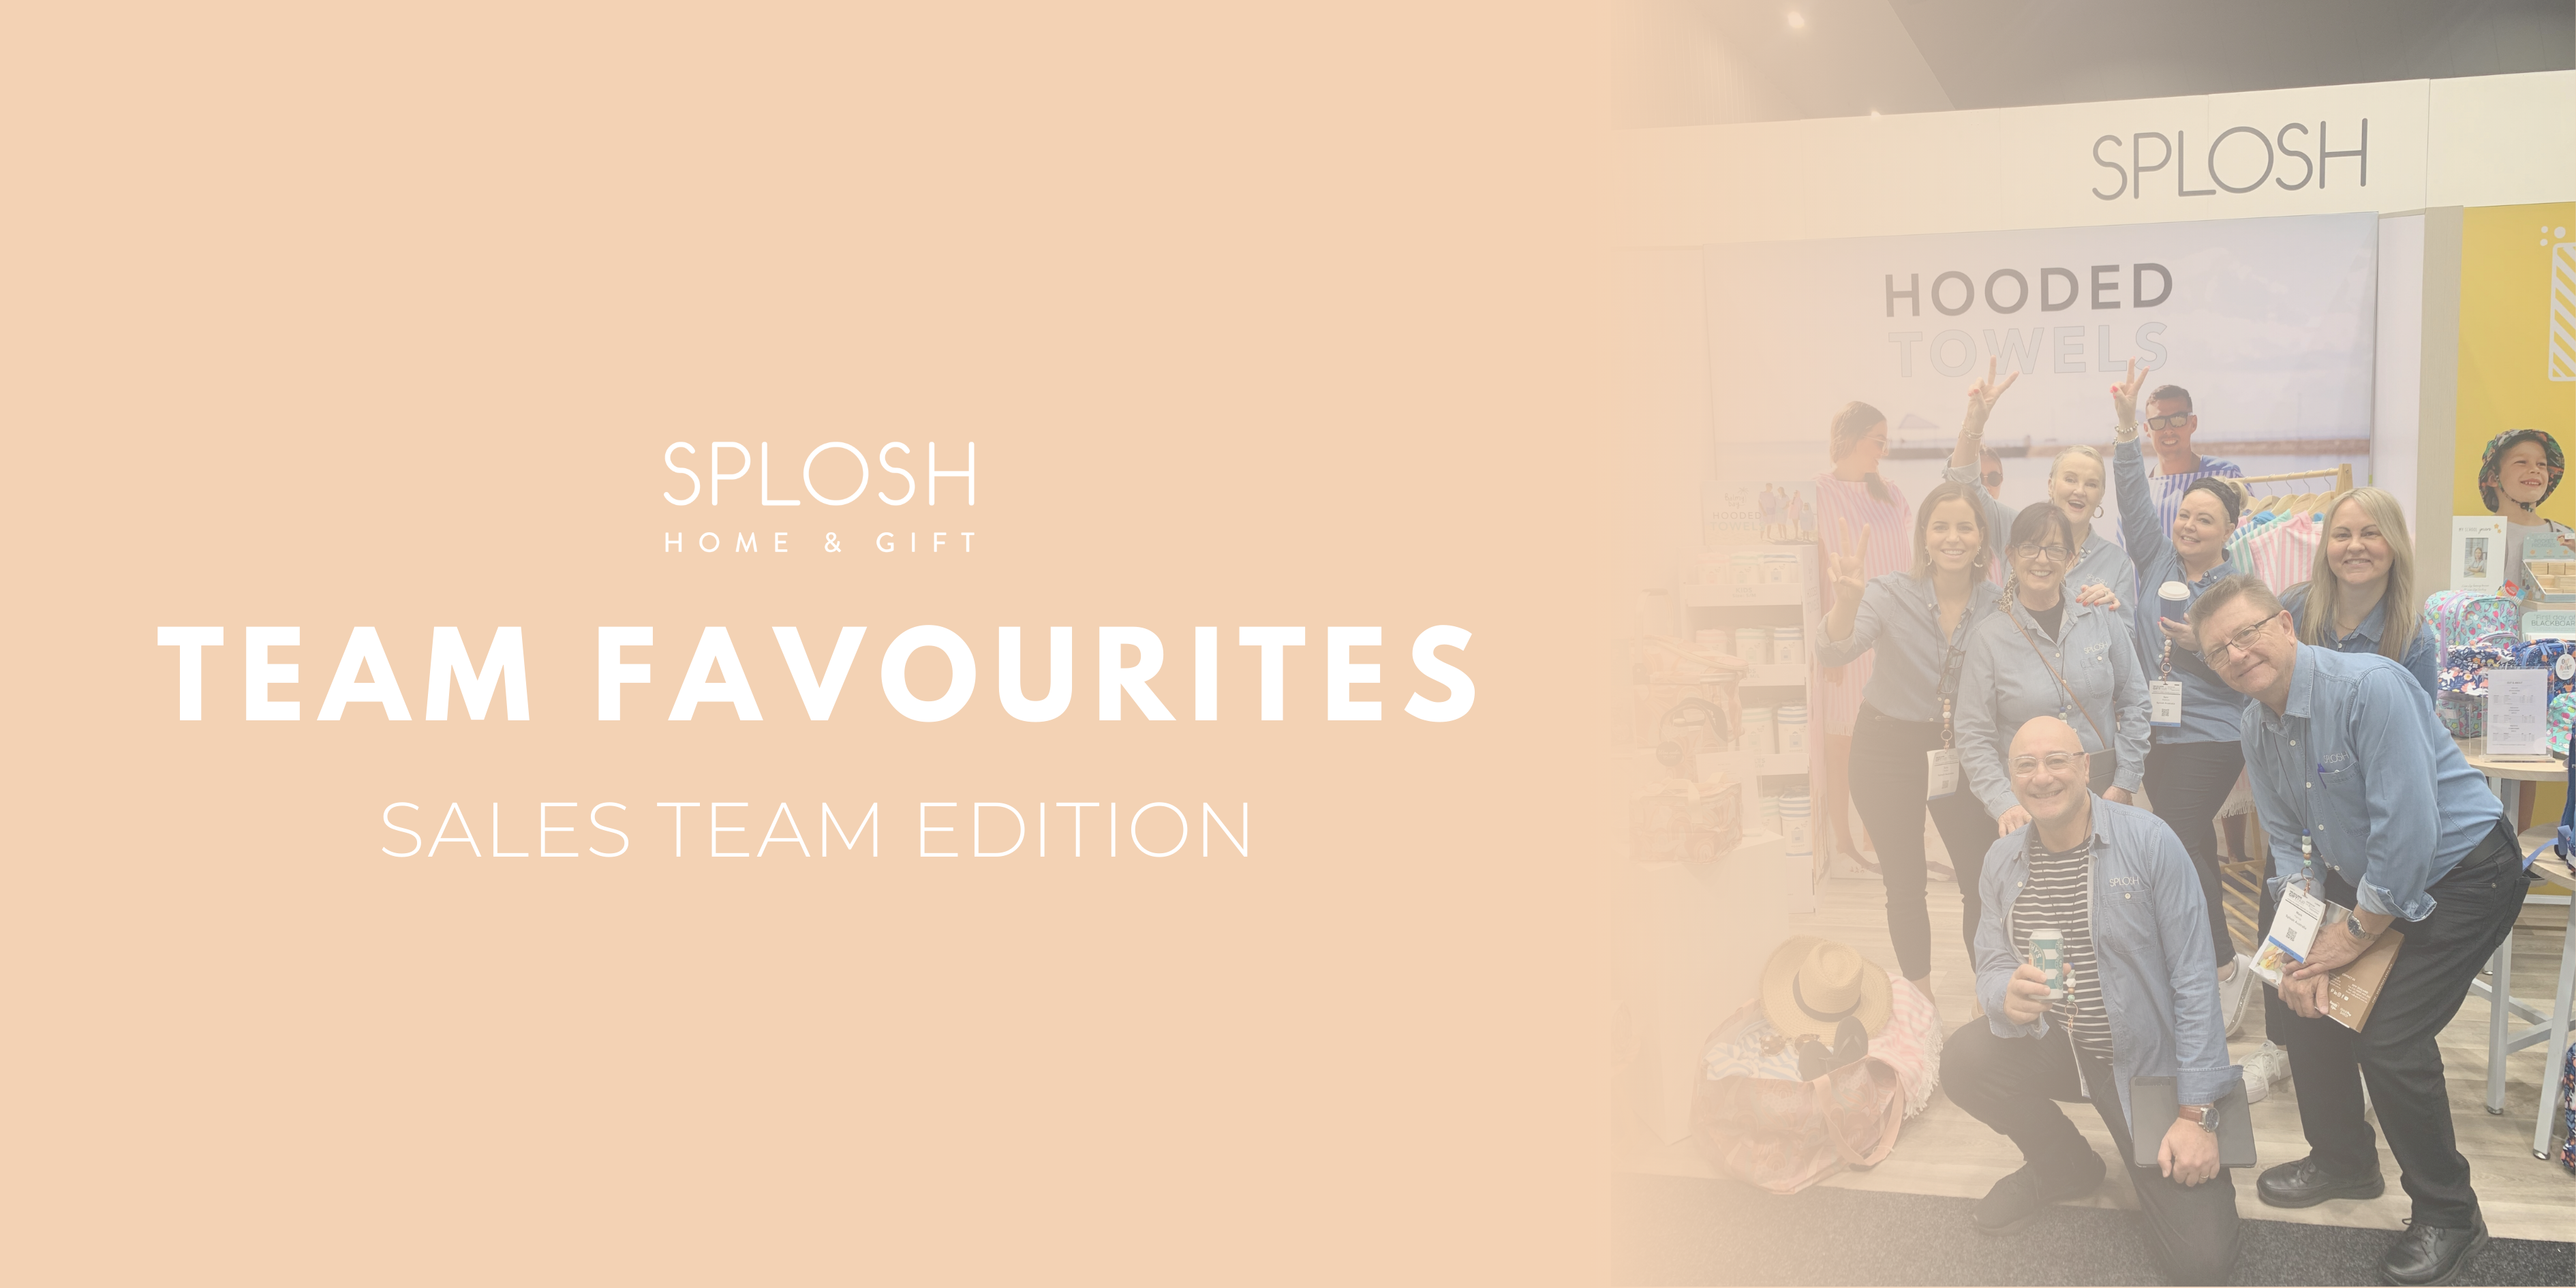 The Splosh Team Favourites - Sales Team Edition